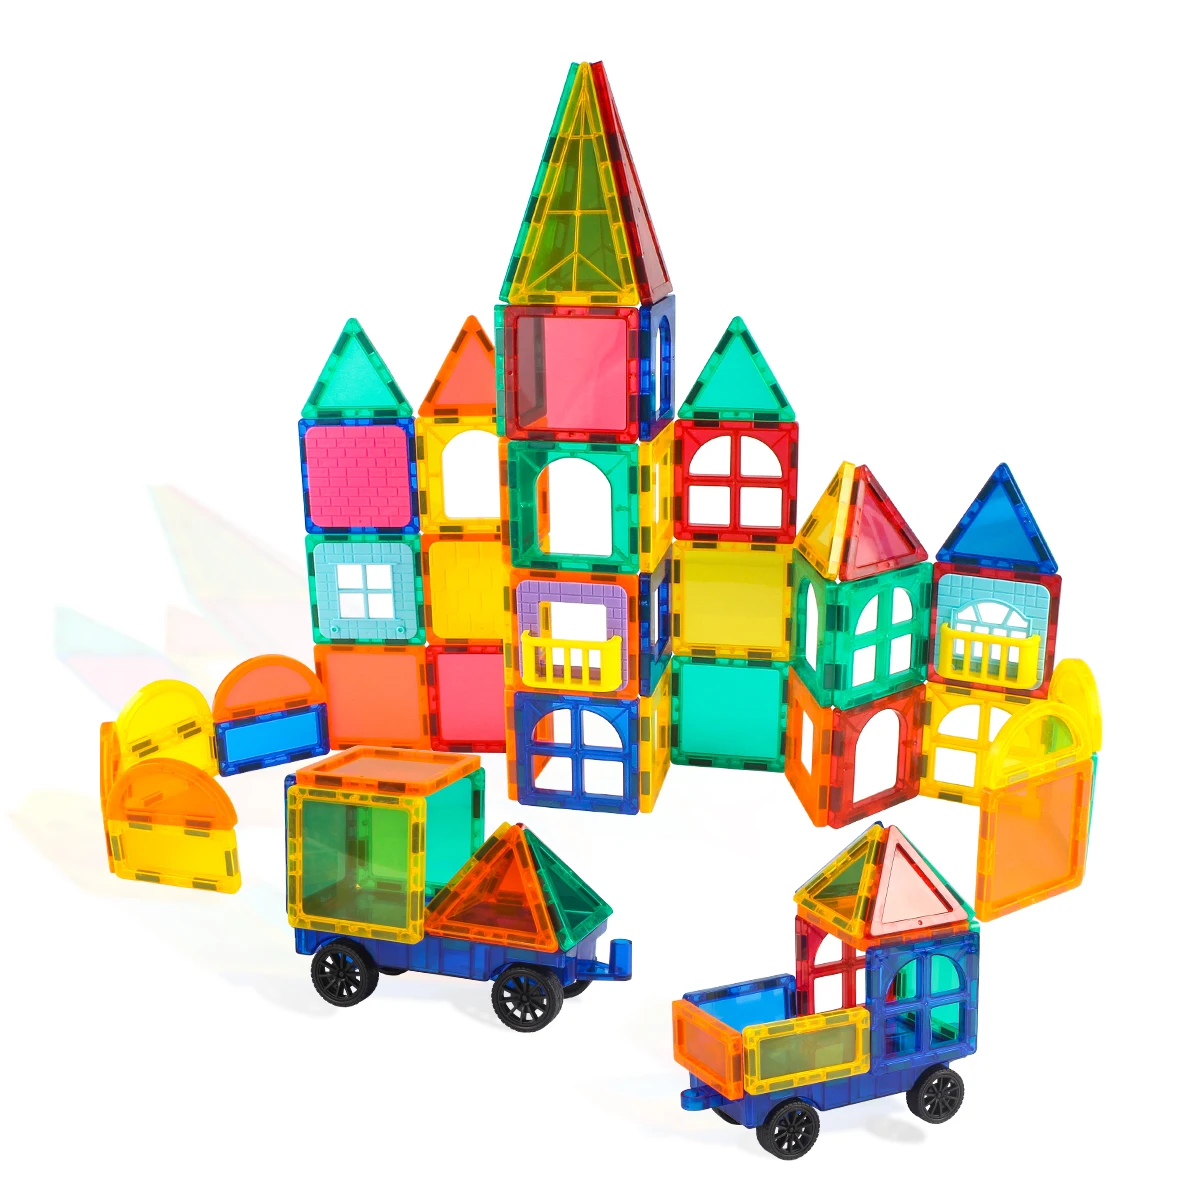 
53pcs Magnetic Tile Paly Set Block Magnetic Building Block Toy Sets Educational Toys  (1600108514026)